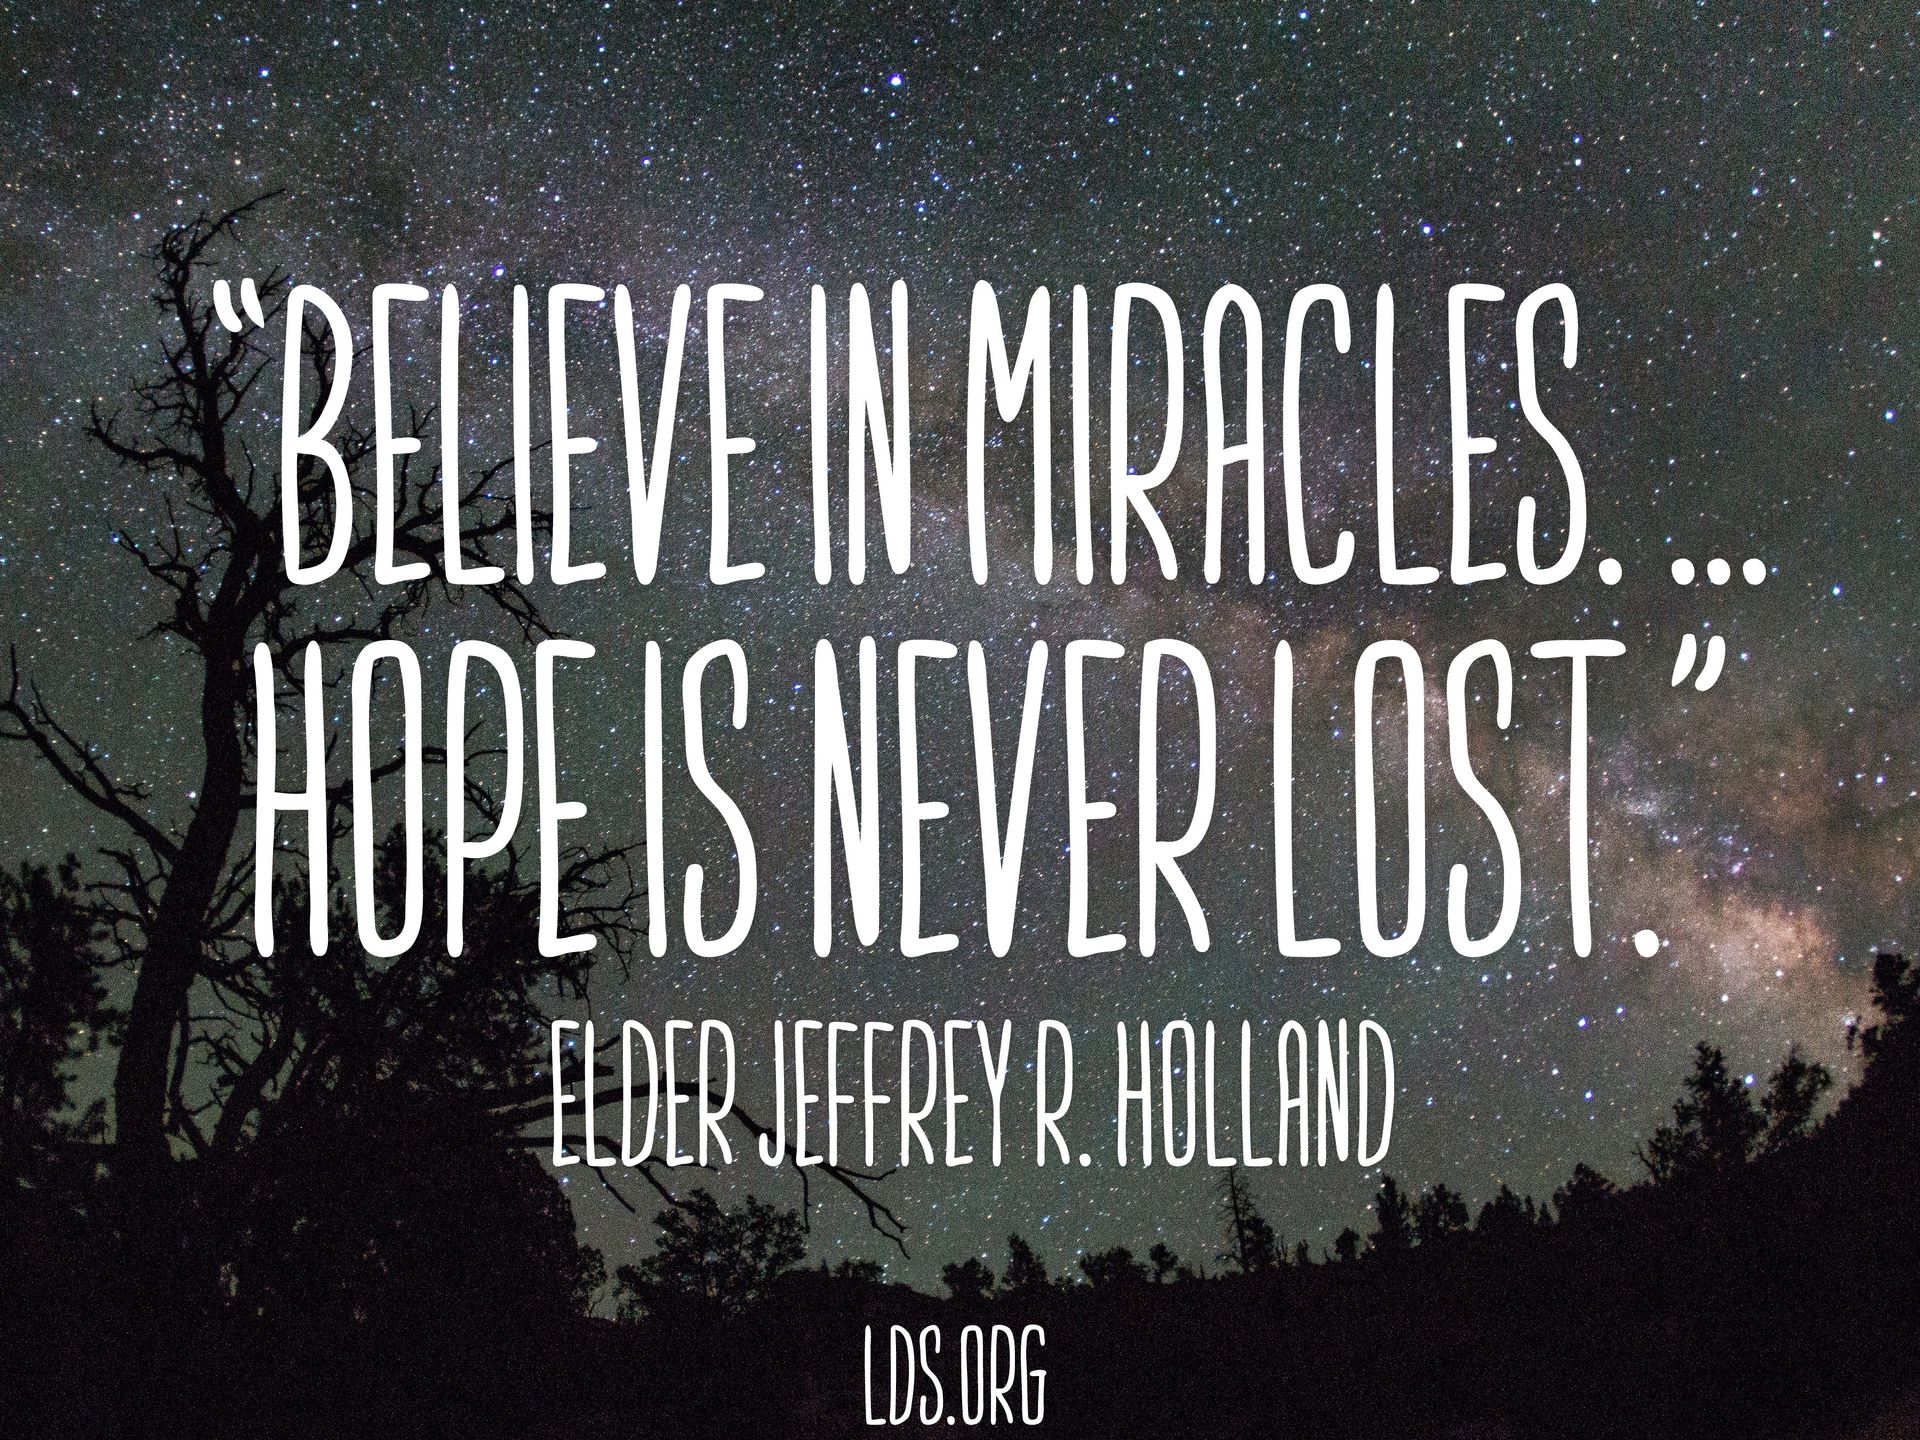 “Believe in miracles. … Hope is never lost.”—Elder Jeffrey R. Holland, “Like a Broken Vessel” © undefined ipCode 1.